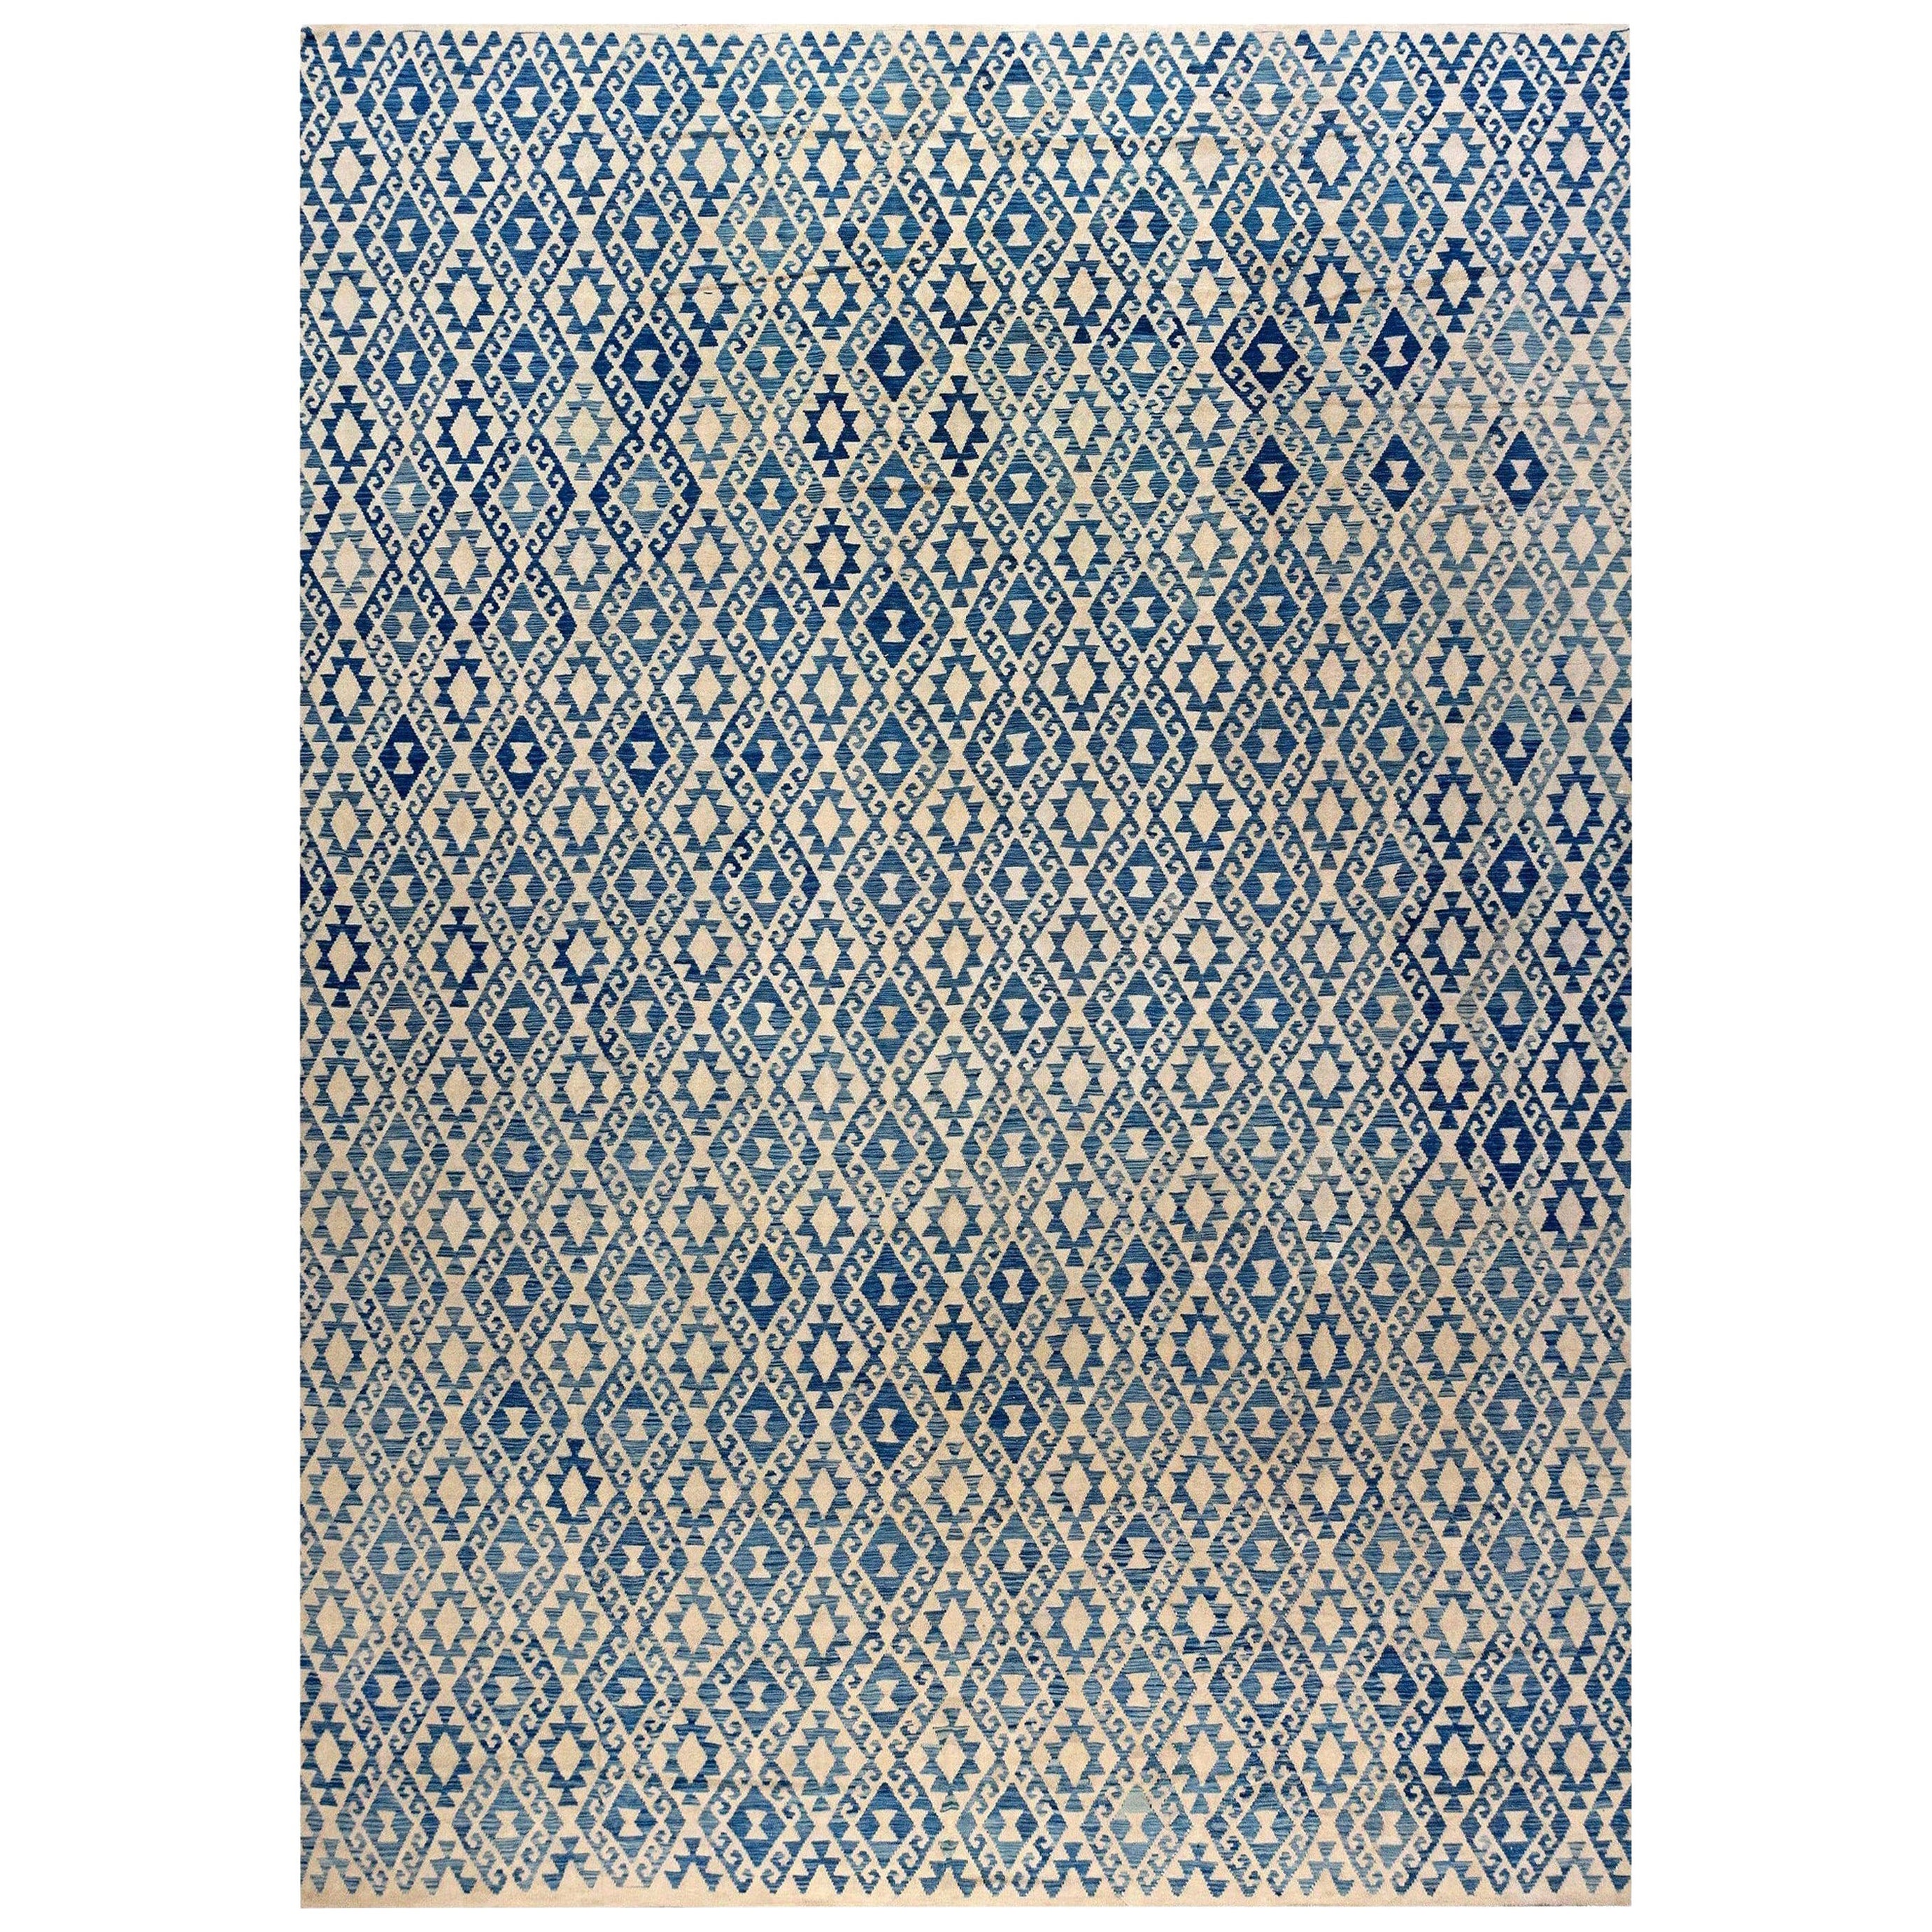 Contemporary Geometric Blue and Beige Flat-Weave Wool Rug by Doris Leslie Blau For Sale